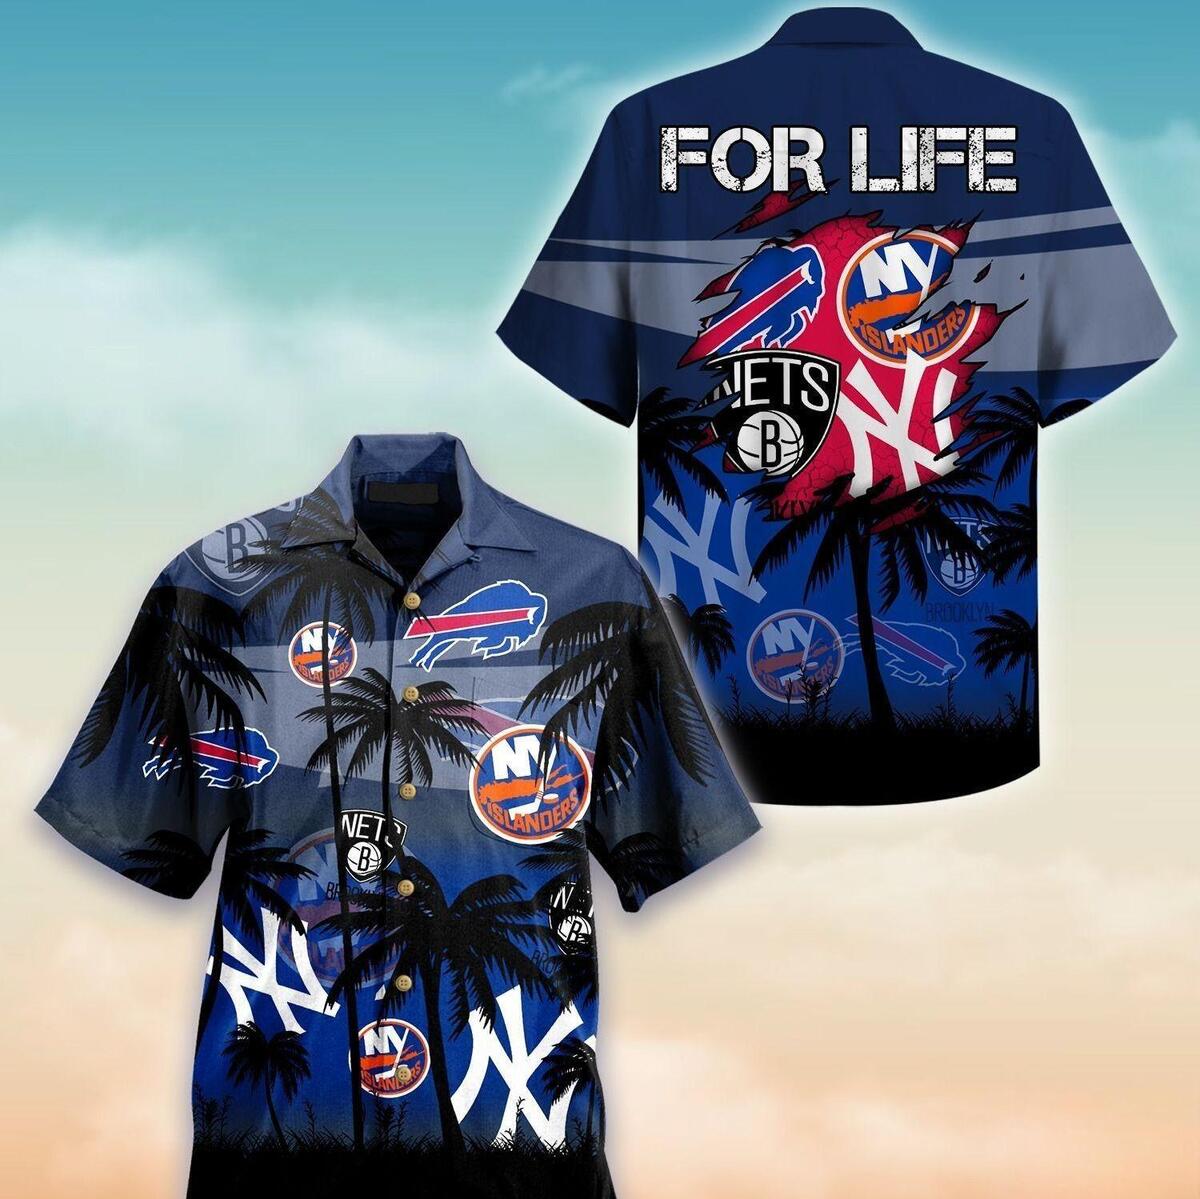 New York Yankees Pineapple Aloha Hawaiian Shirt New York Yankees